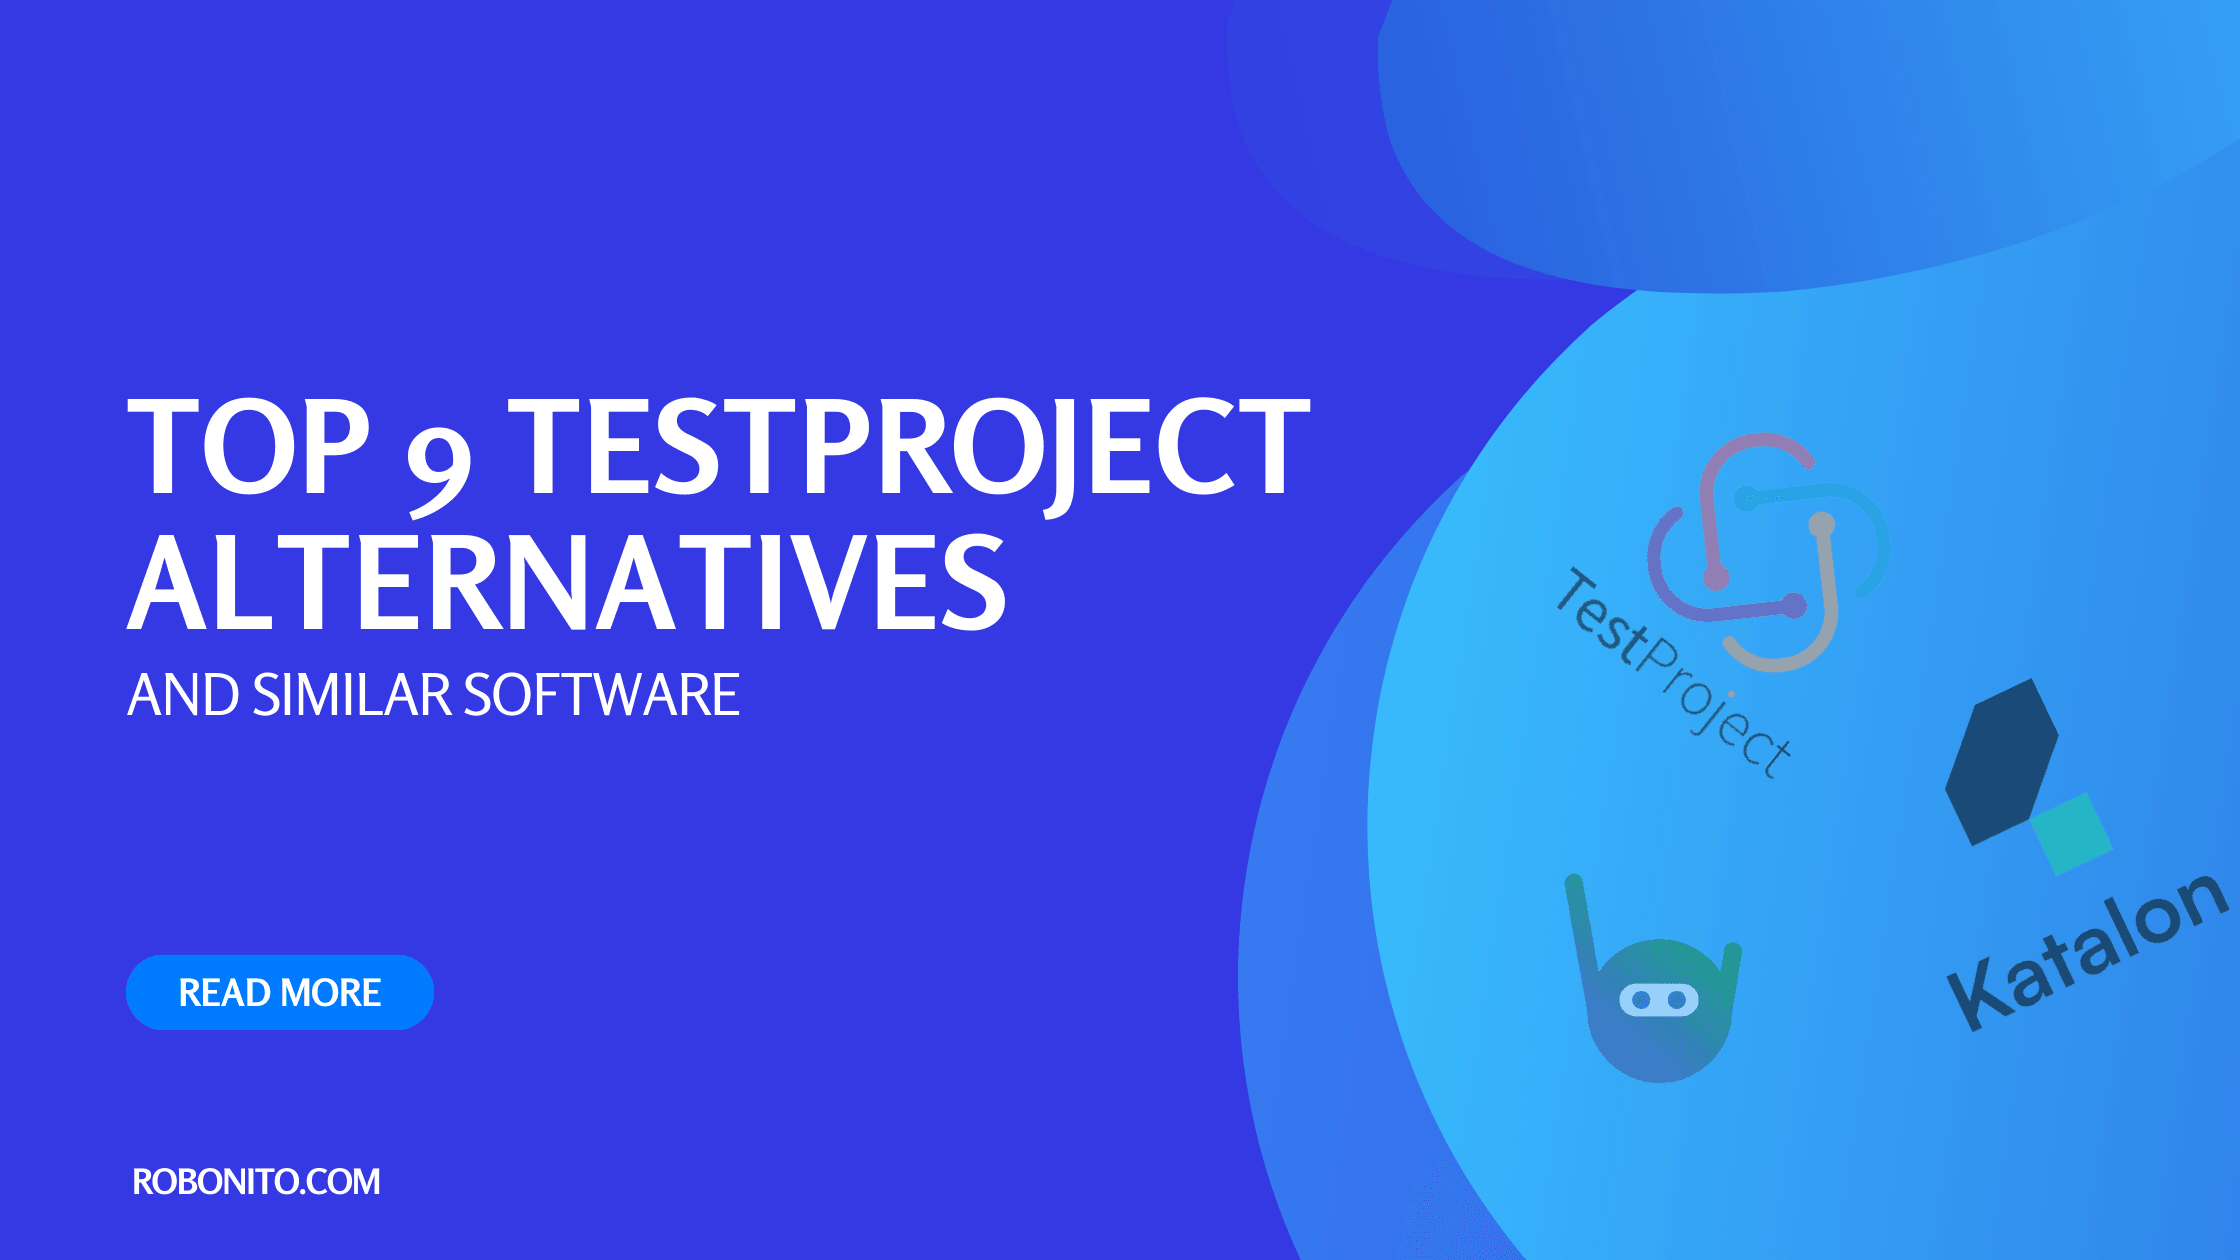 Top 9 TestProject Alternatives